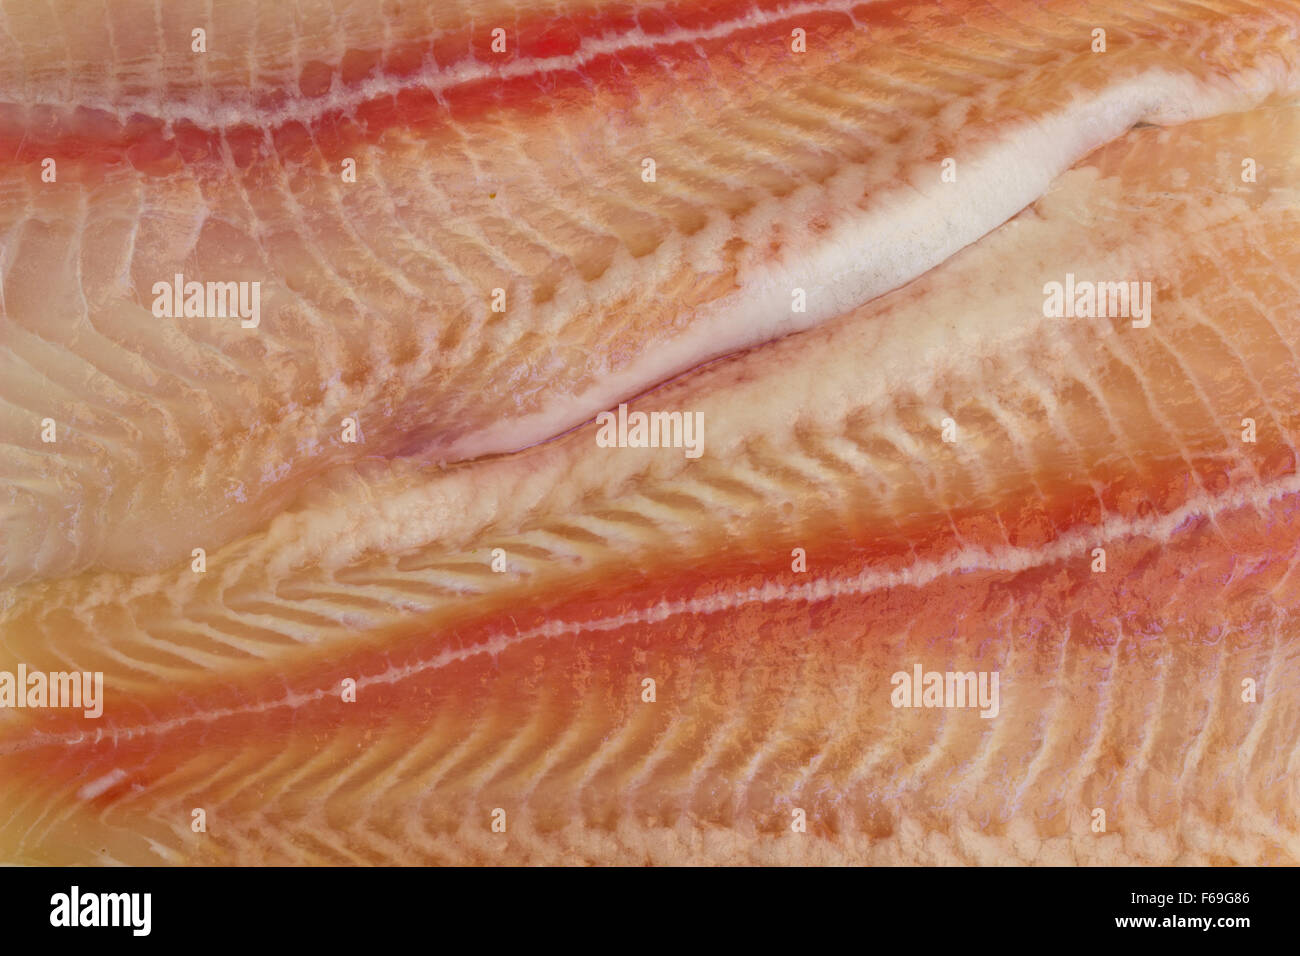 Raw fish fillet Stock Photo